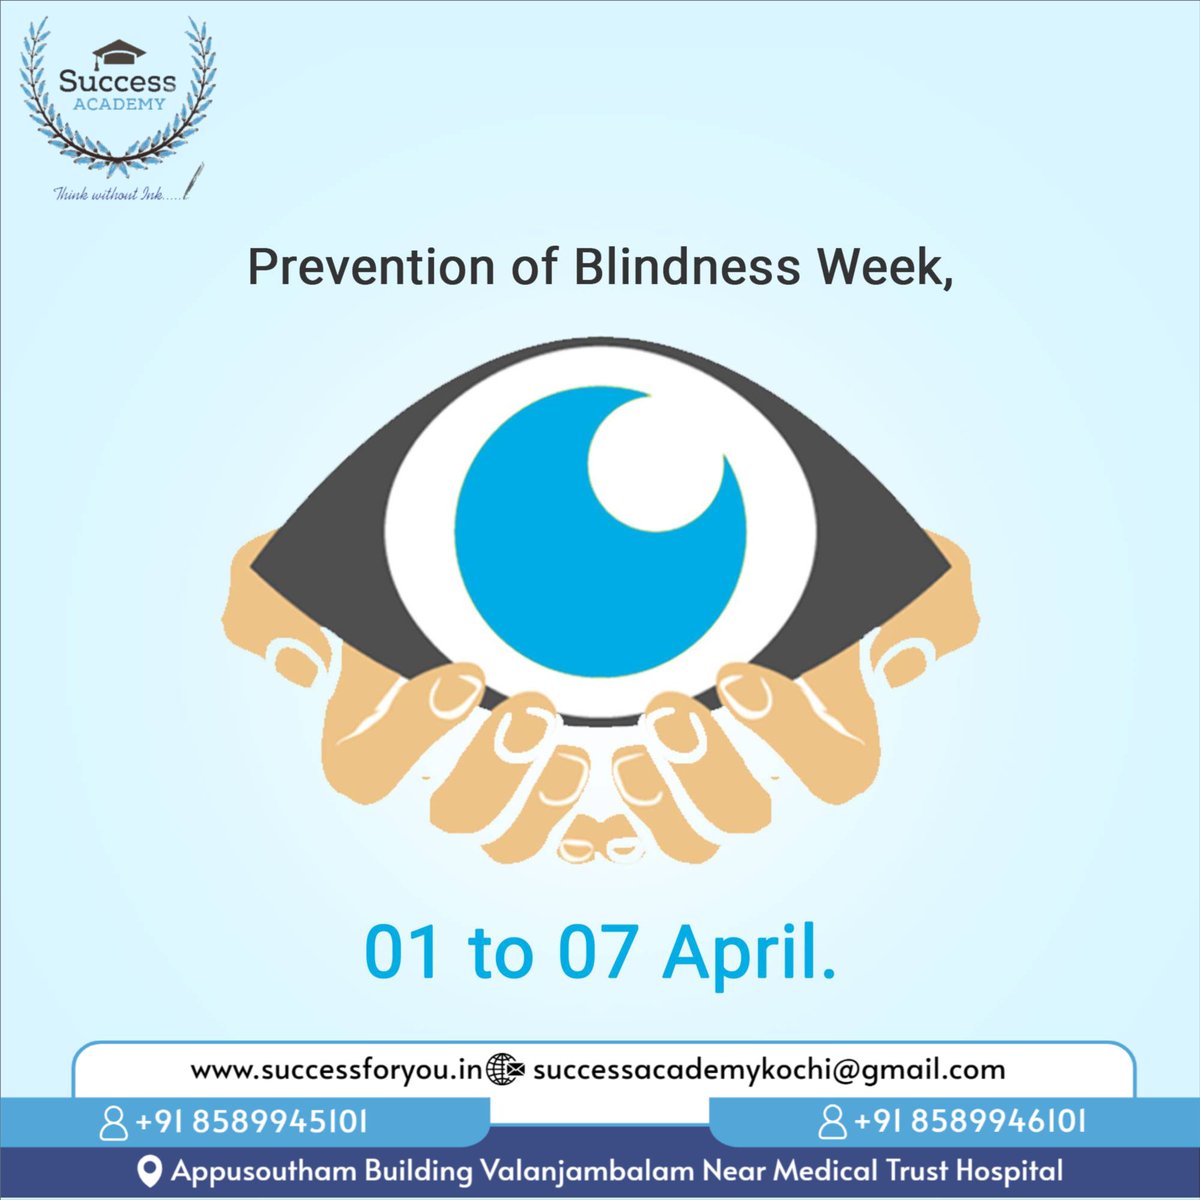 #PreventionOfBlindnessWeek #VisionHealth #EyeCare #EyeHealth #EyeSight #PreventBlindness #VisionCare #SightSaving #HealthyEyes #VisionAwareness #EyeWellness #EyeCheckup #EyeProtection #Optometry #Ophthalmology #EyeCareForAll #SSCCoaching #BankCoaching #SuccessAcademyKochi